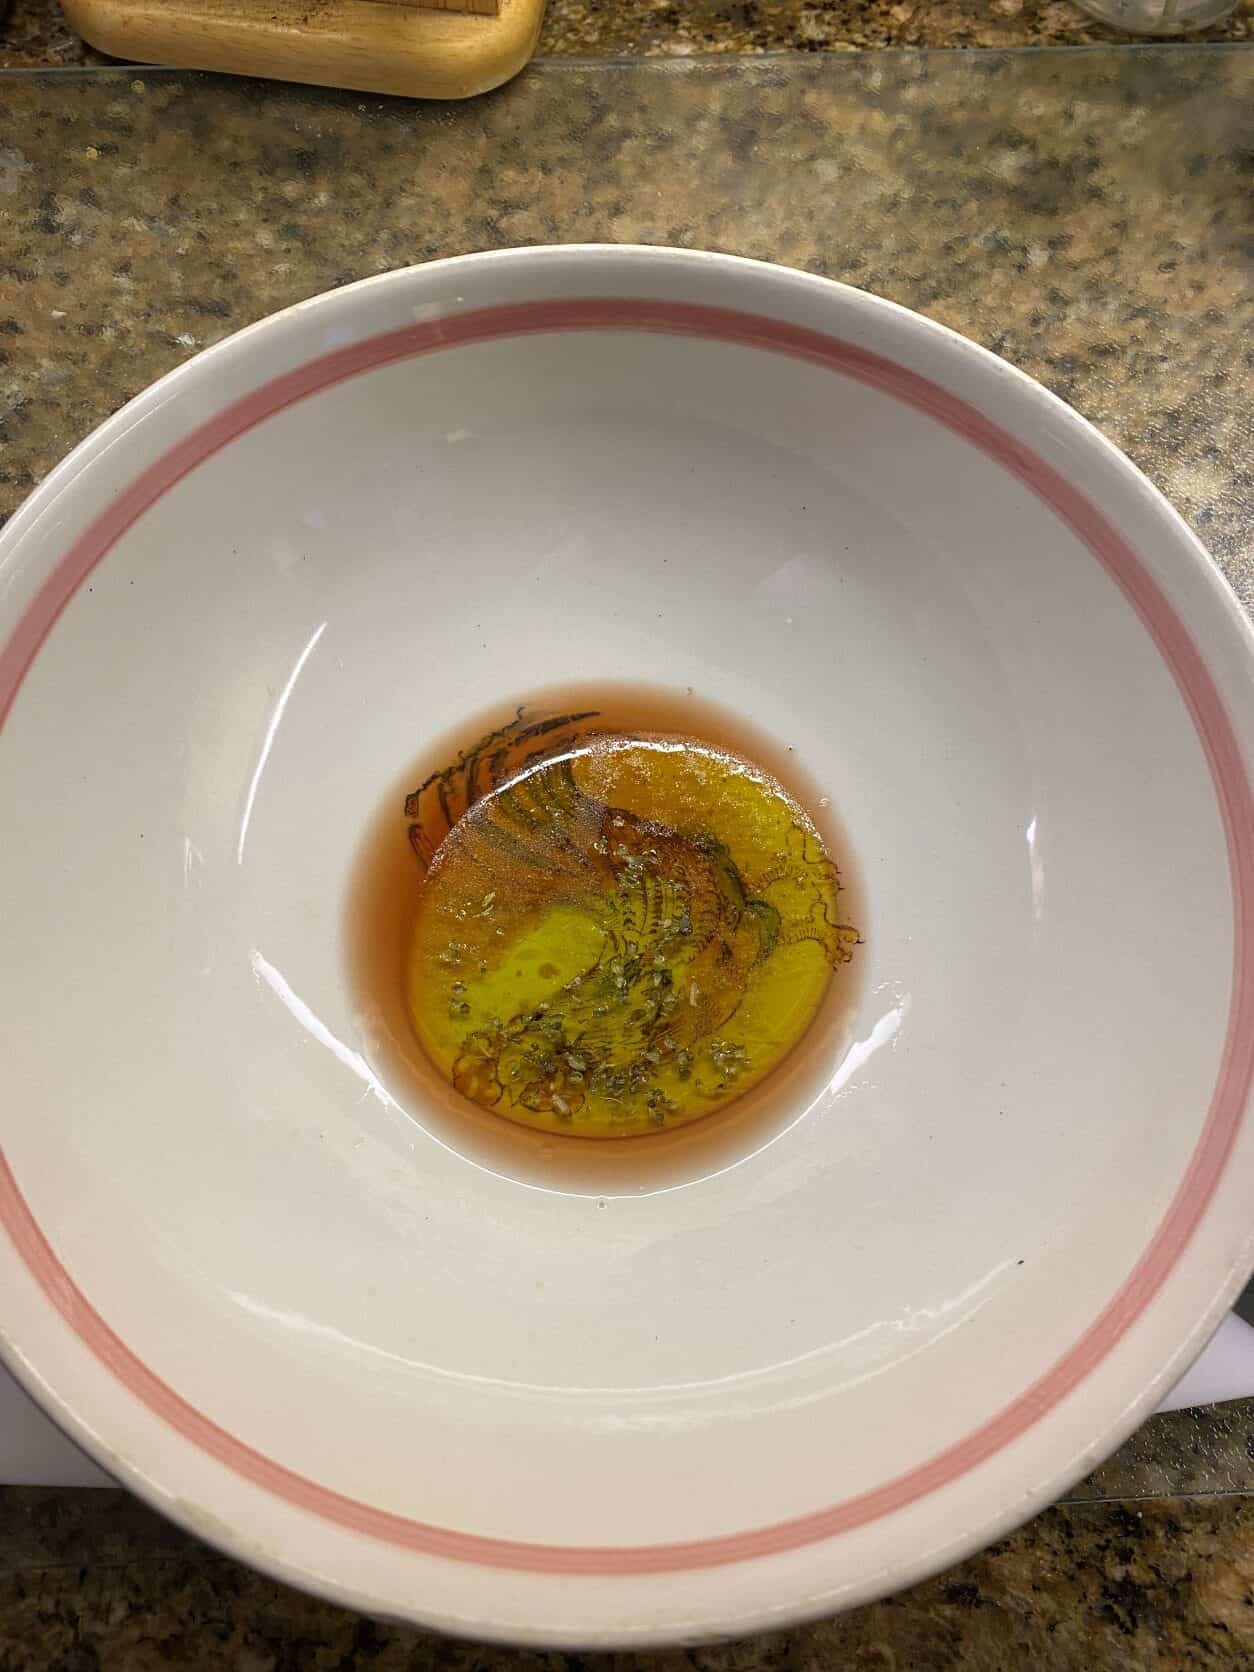 Oil Vinegar Salt and Oregano in a Salad Bowl